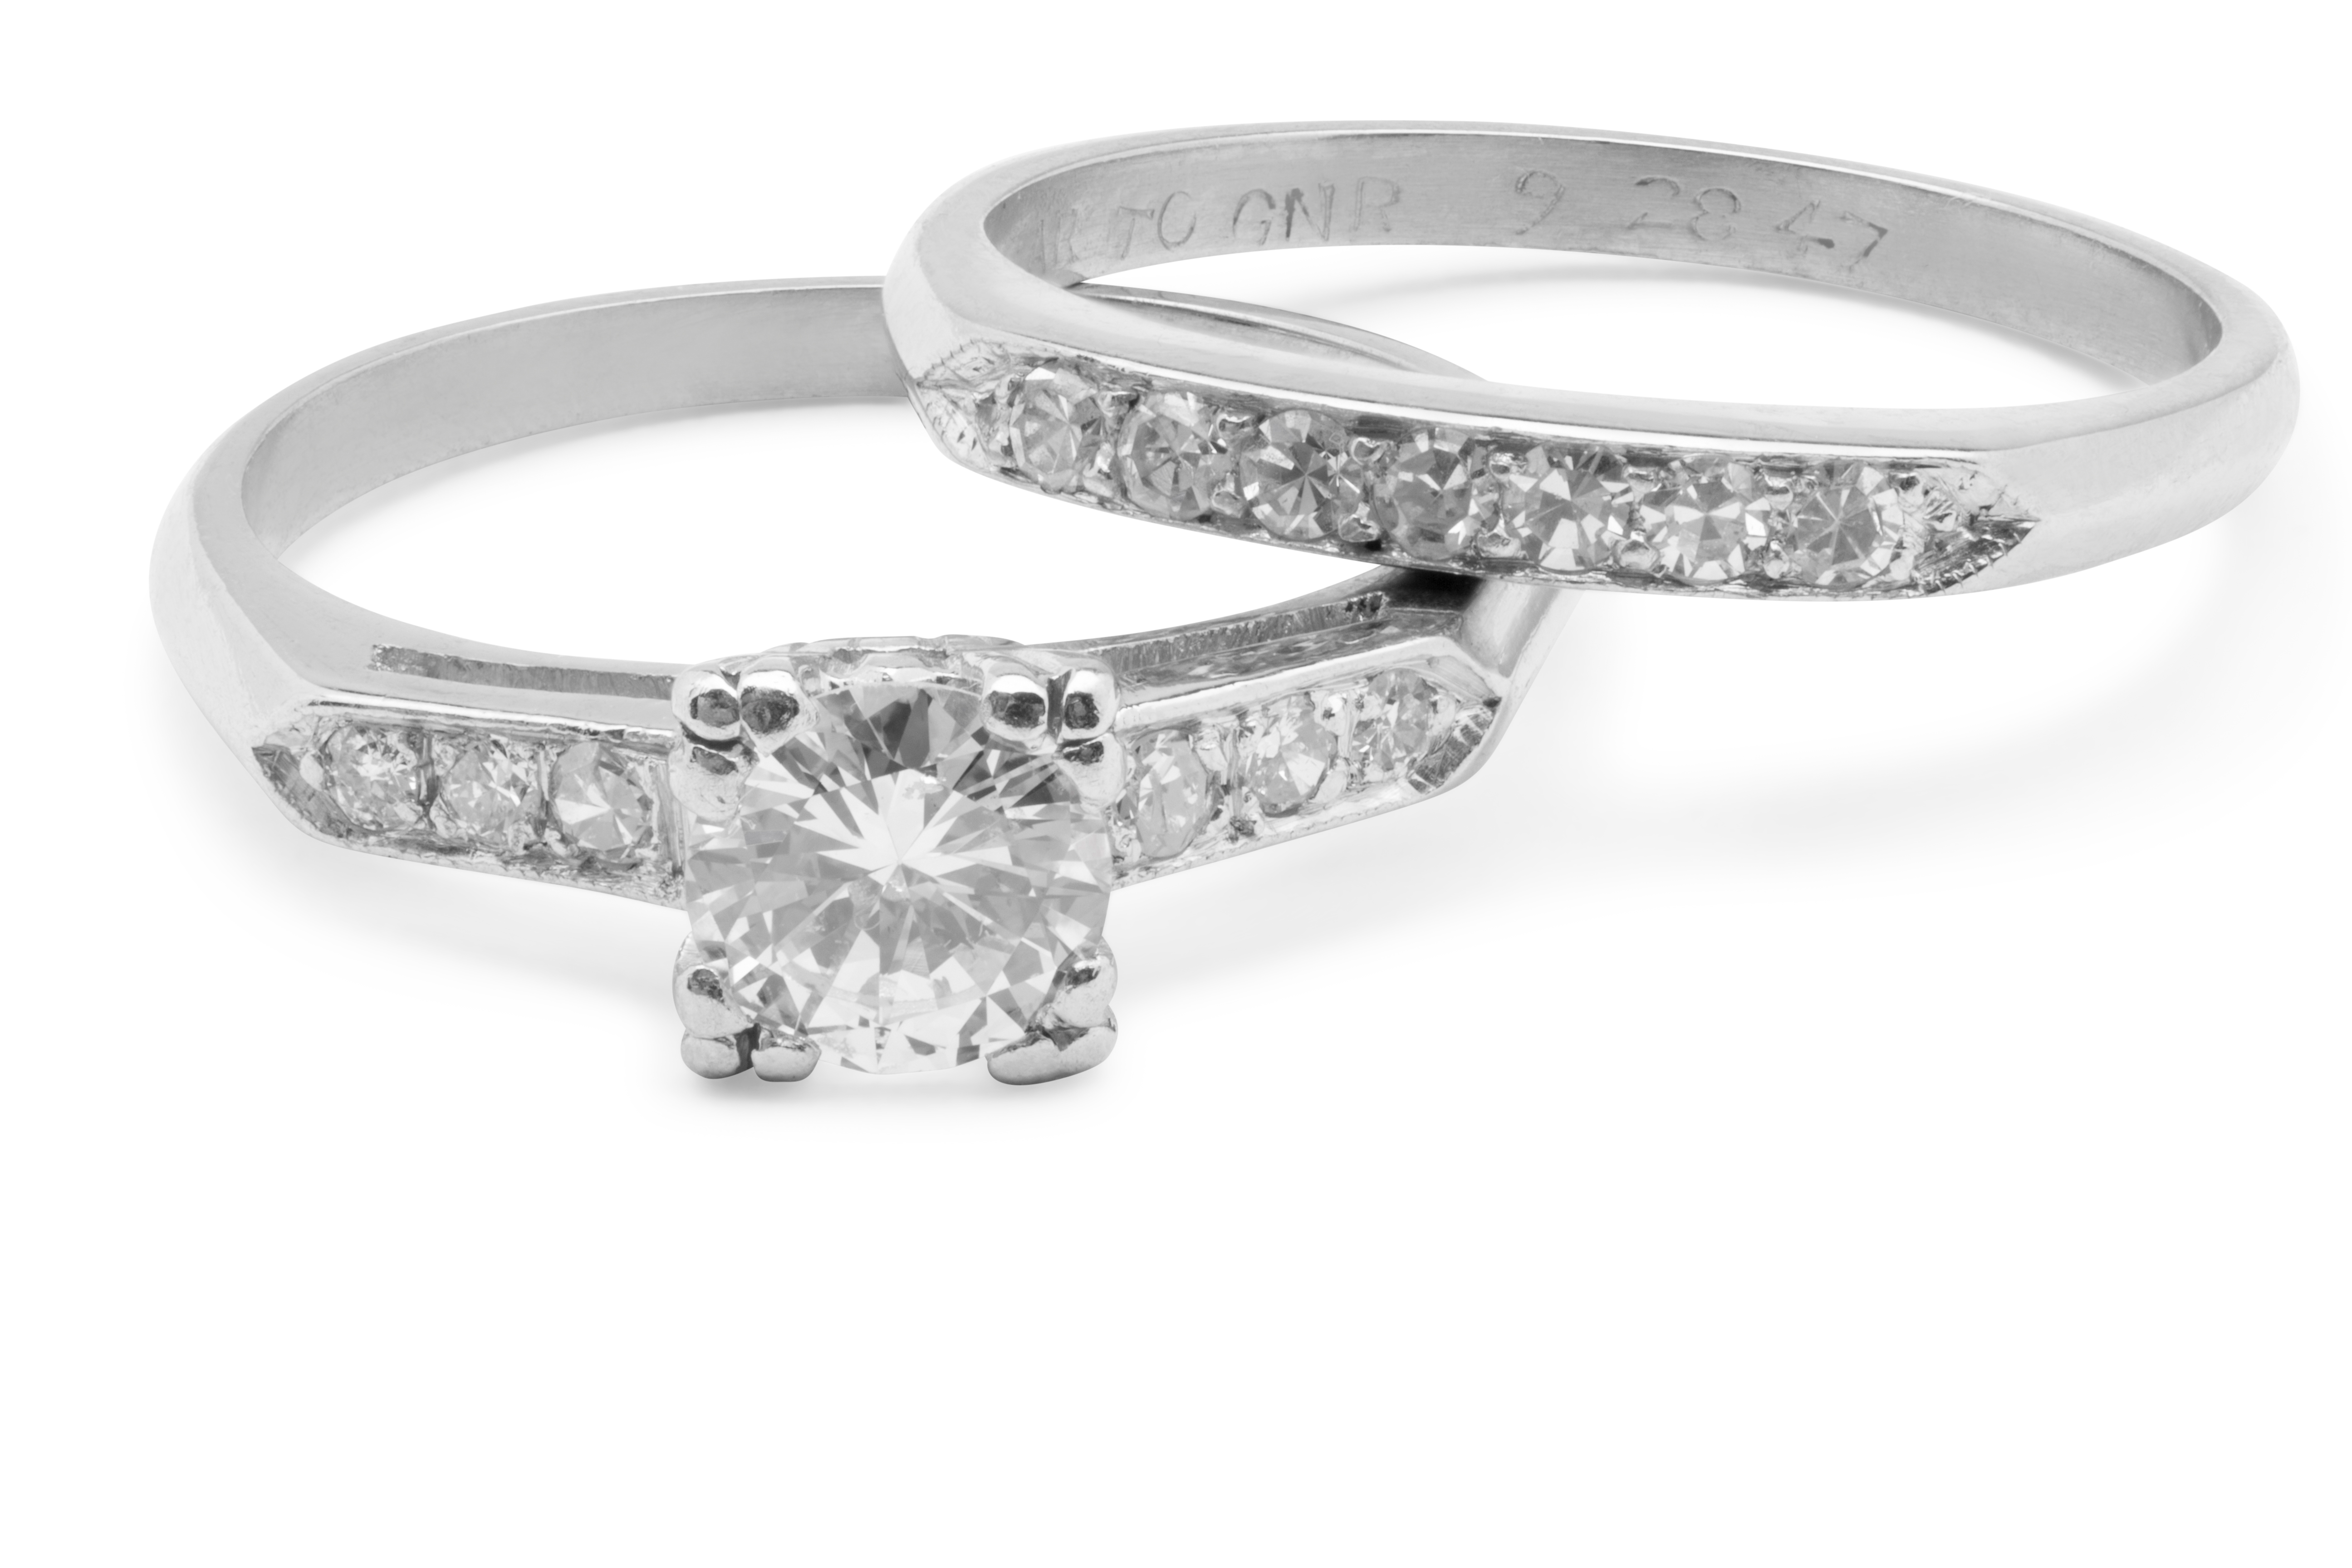 engagement clipart vintage wedding ring